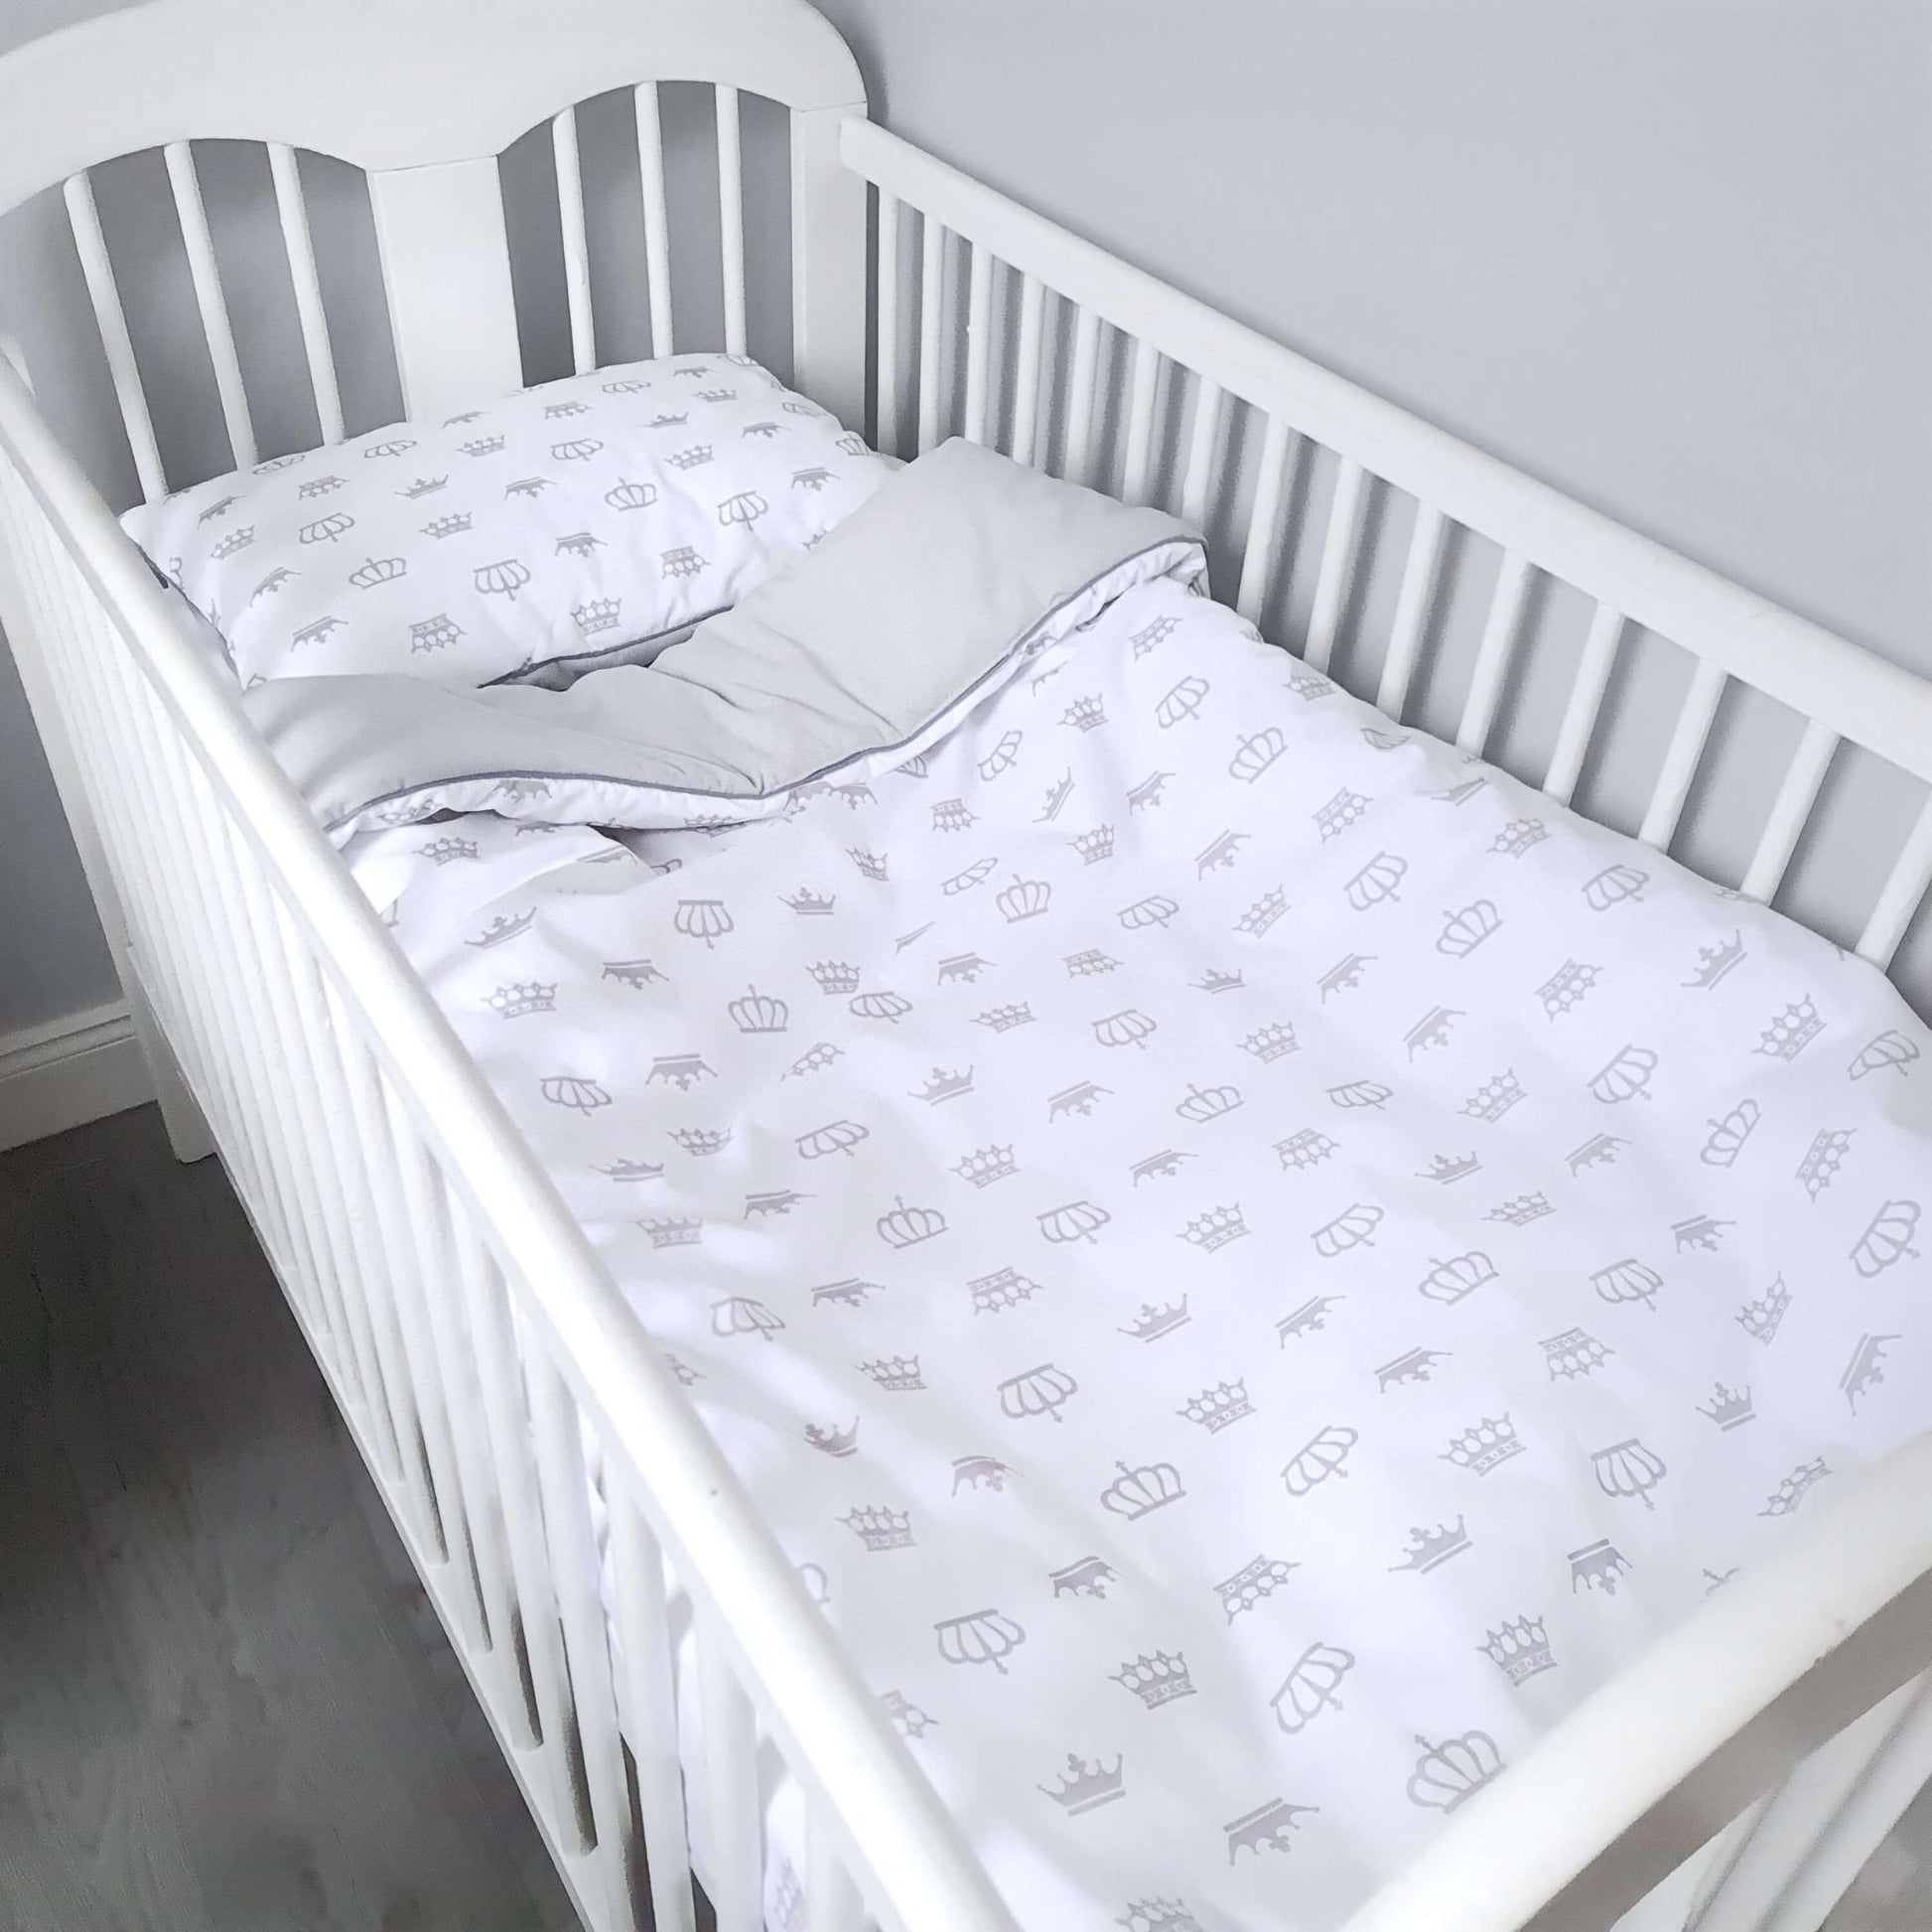 quilt pillow for toddler in Ireland cotton velvet crowns pattern